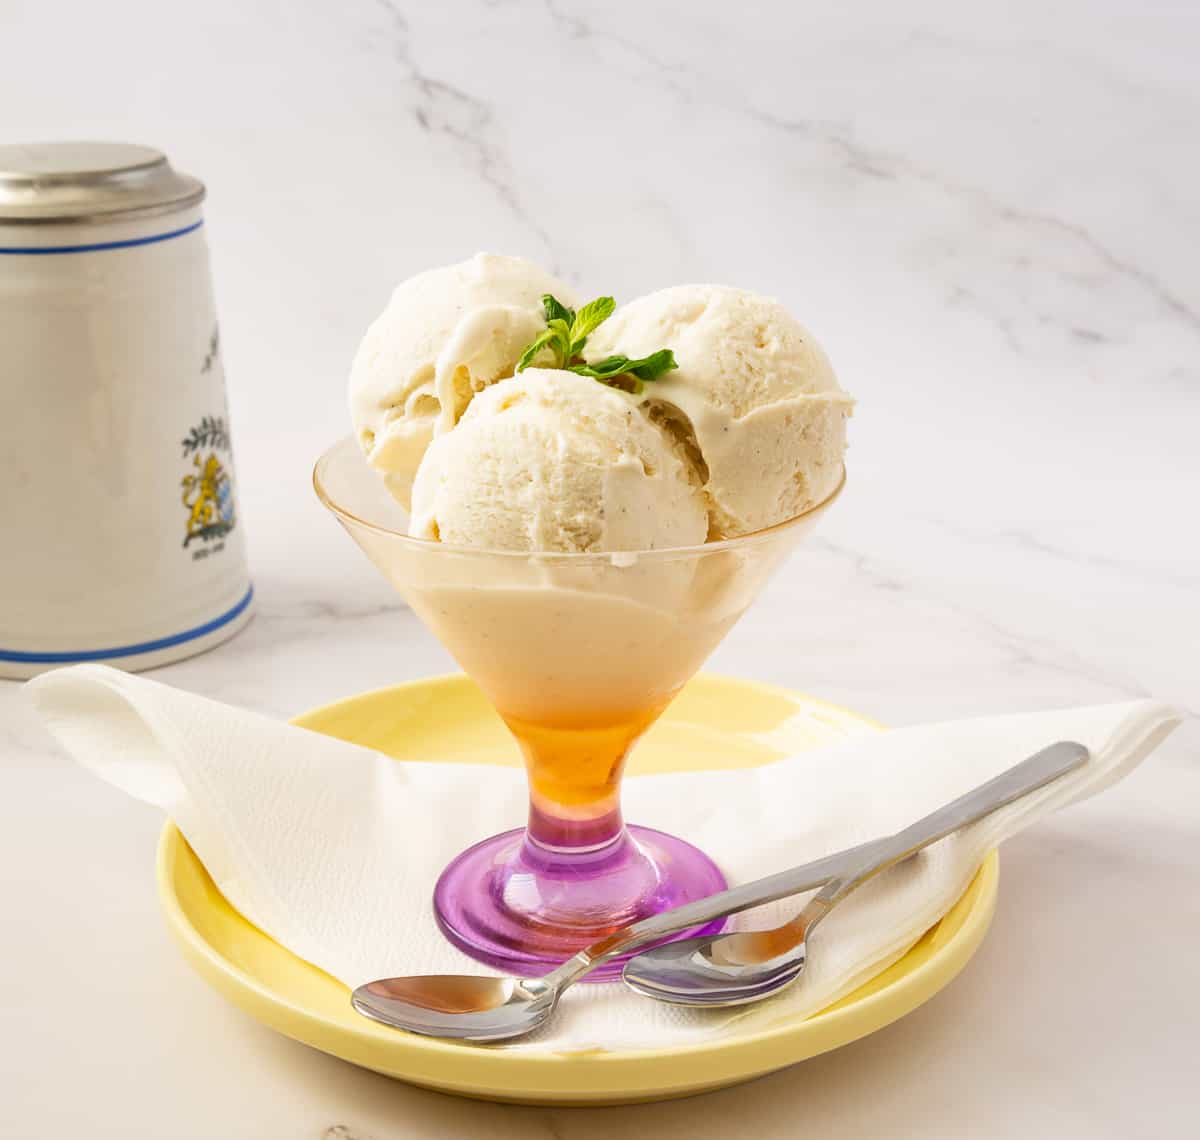 A bowl with vanilla ice cream.